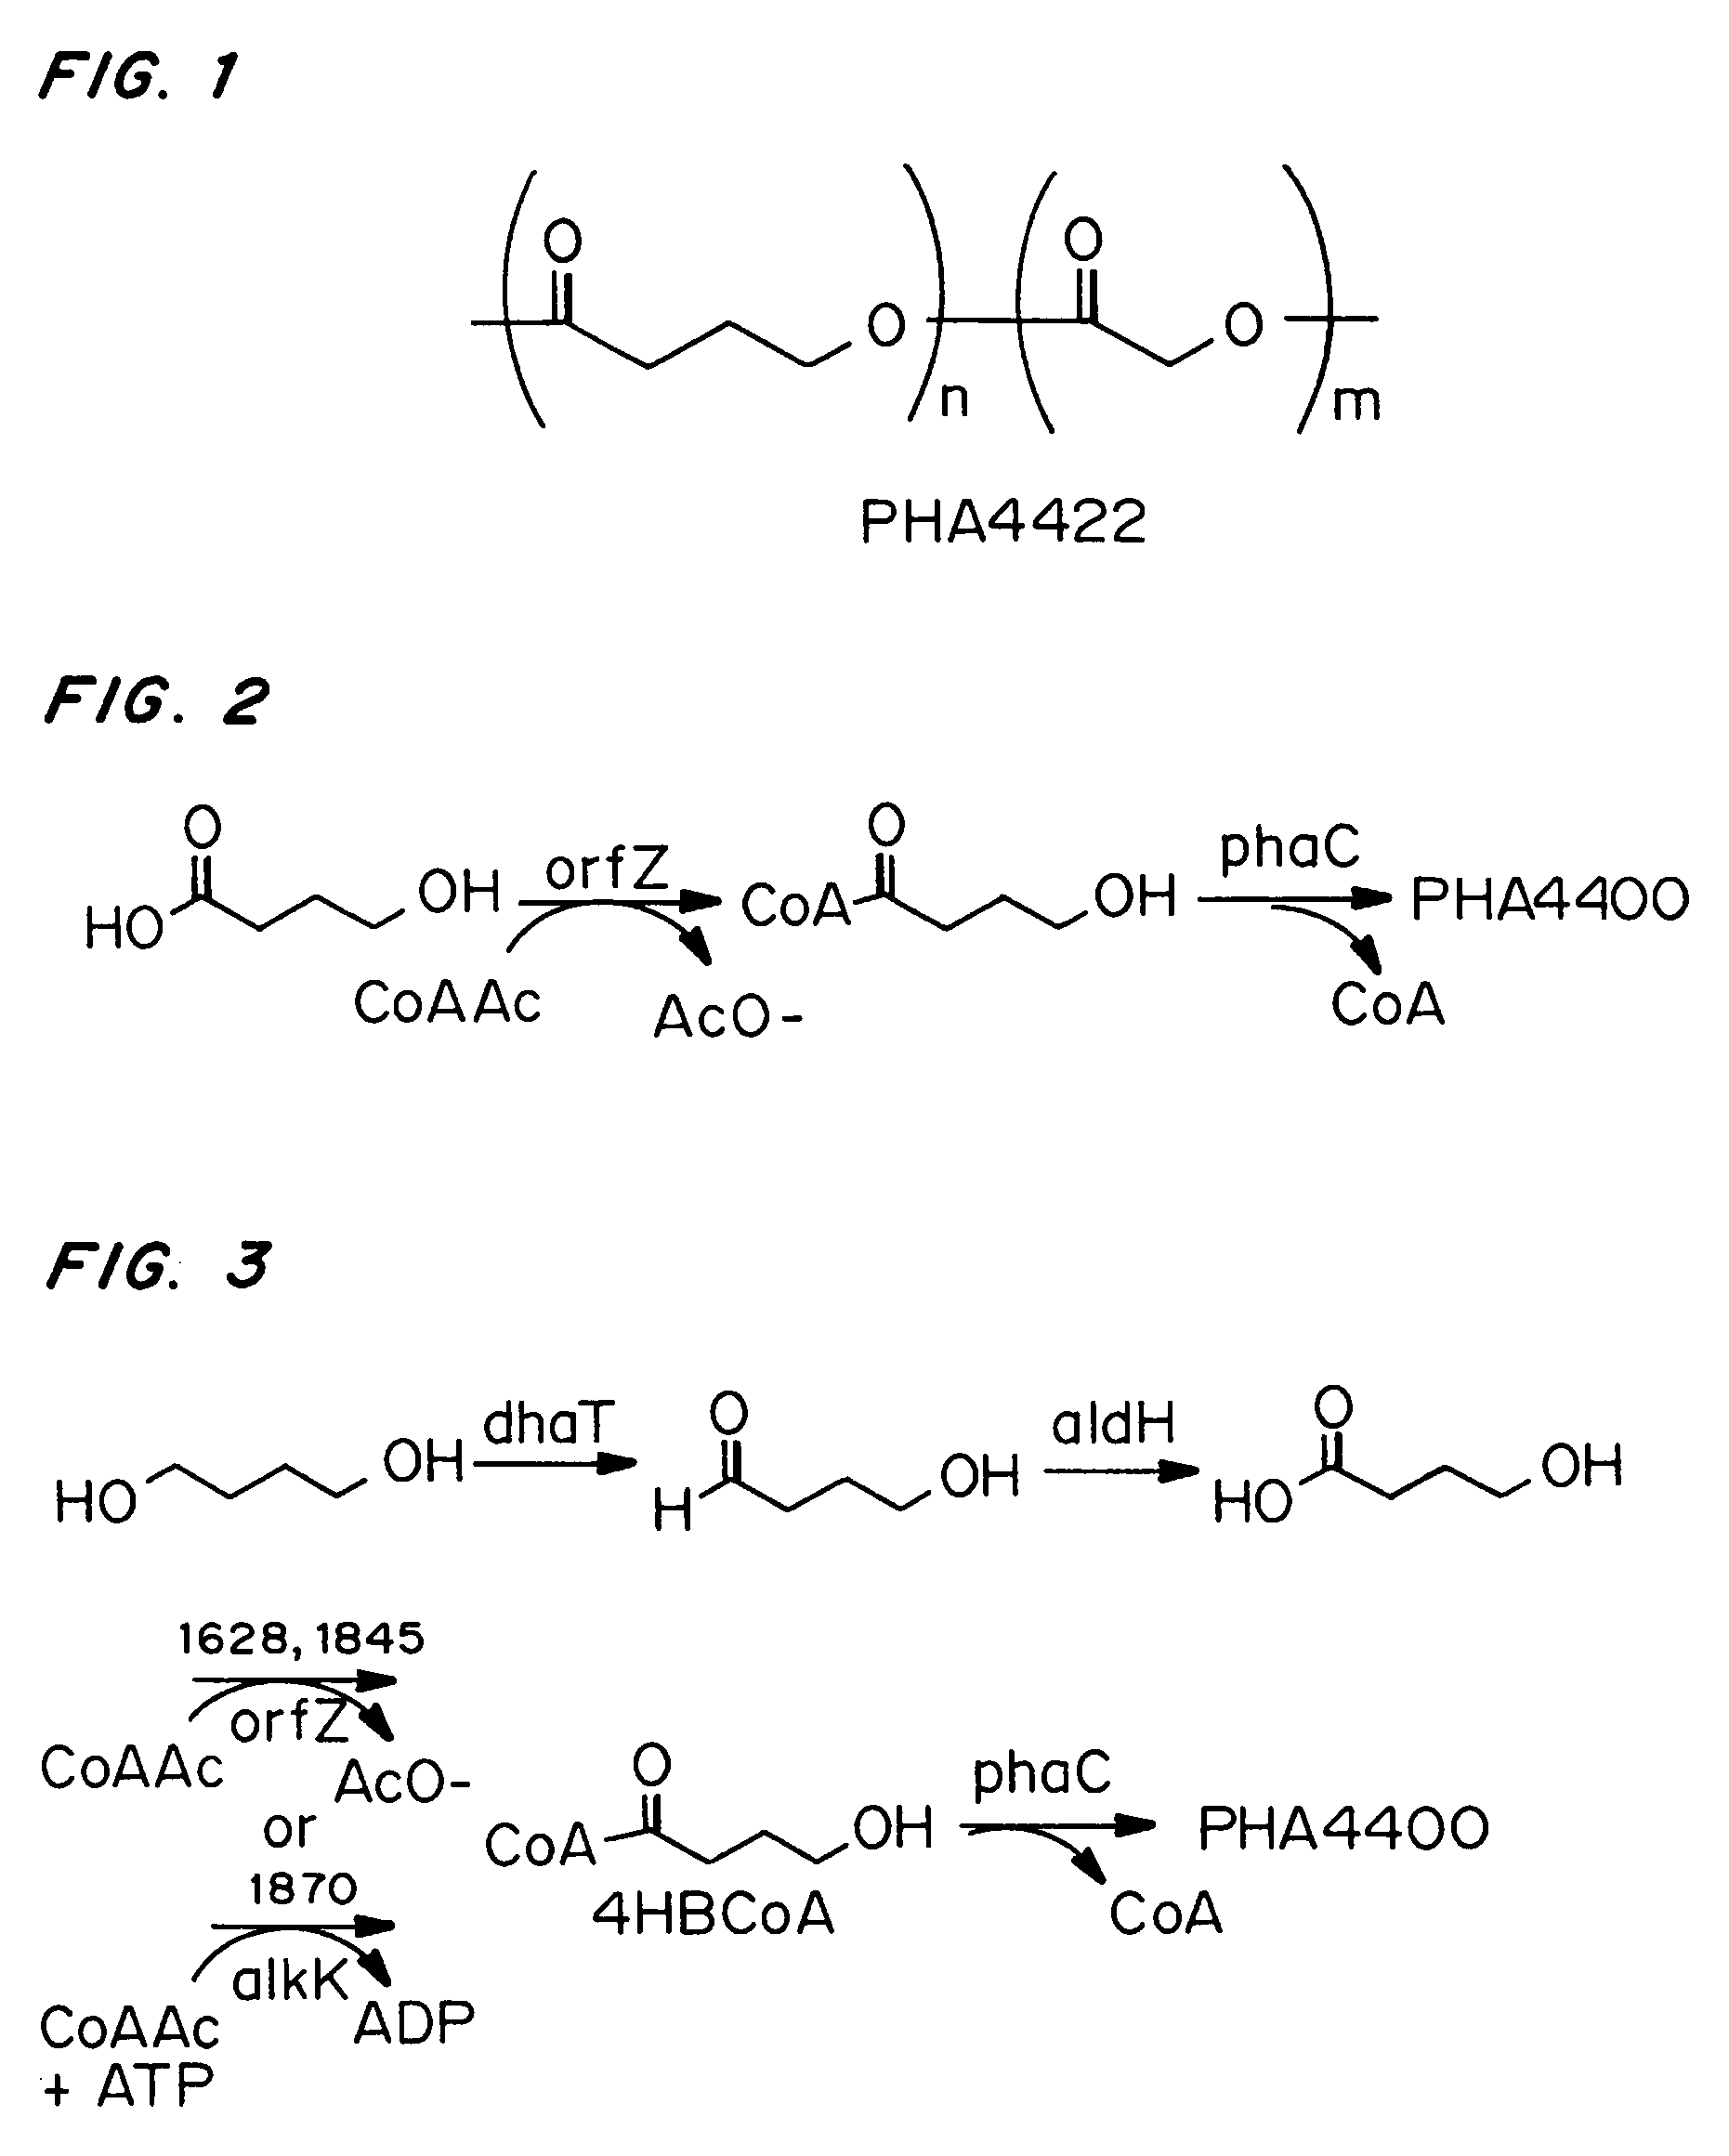 Bioabsorbable polymer containing 2-hydroxyacid monomers